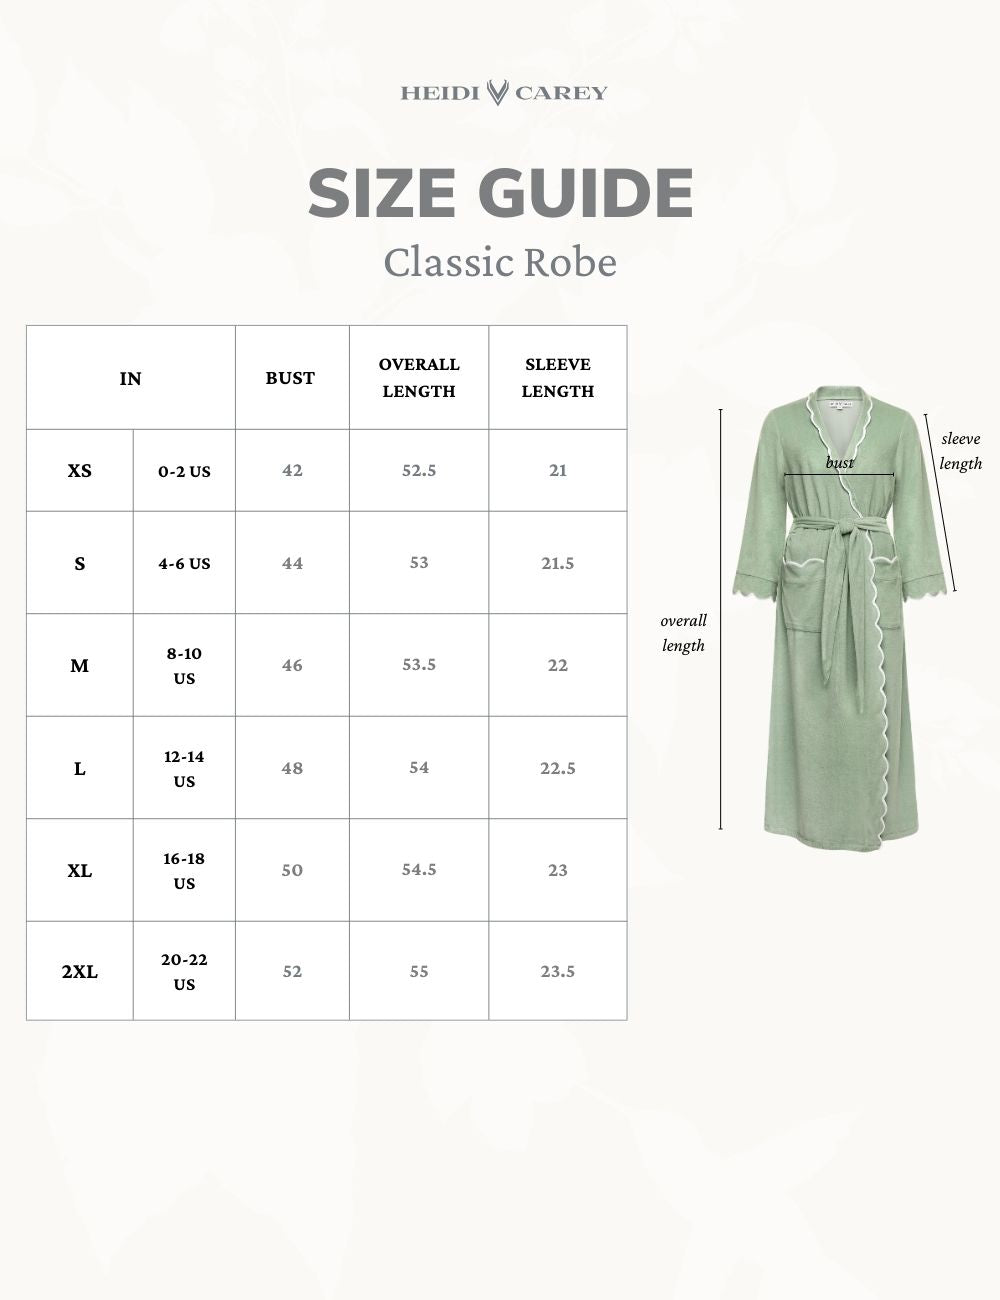 Classic Robe Sizing Chart